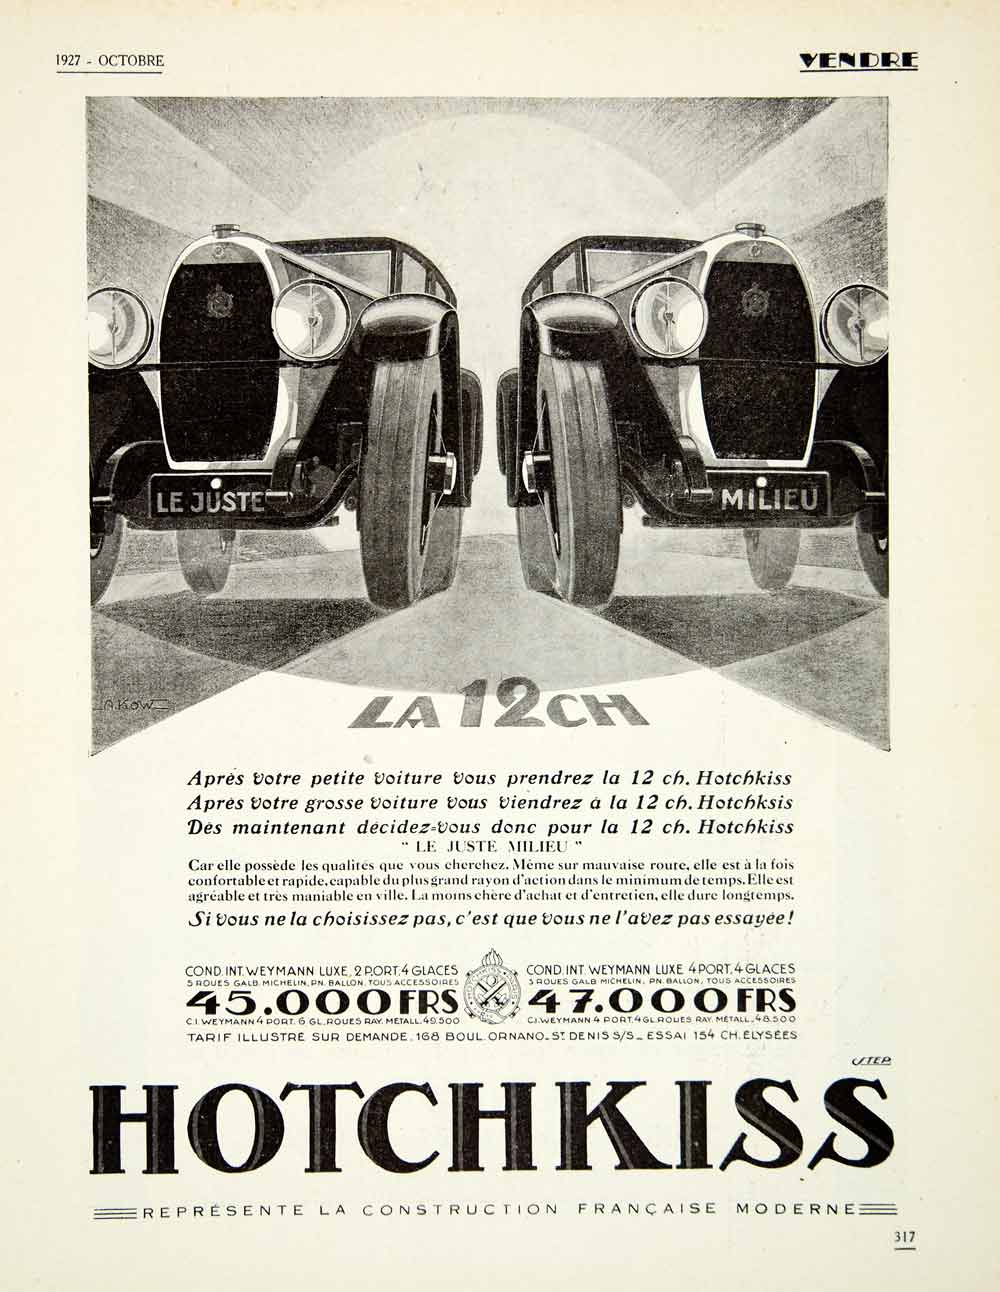 1927 Ad Hotchkiss Automobiles Car Transportation 168 Blvd Ornano St Denis VENA3